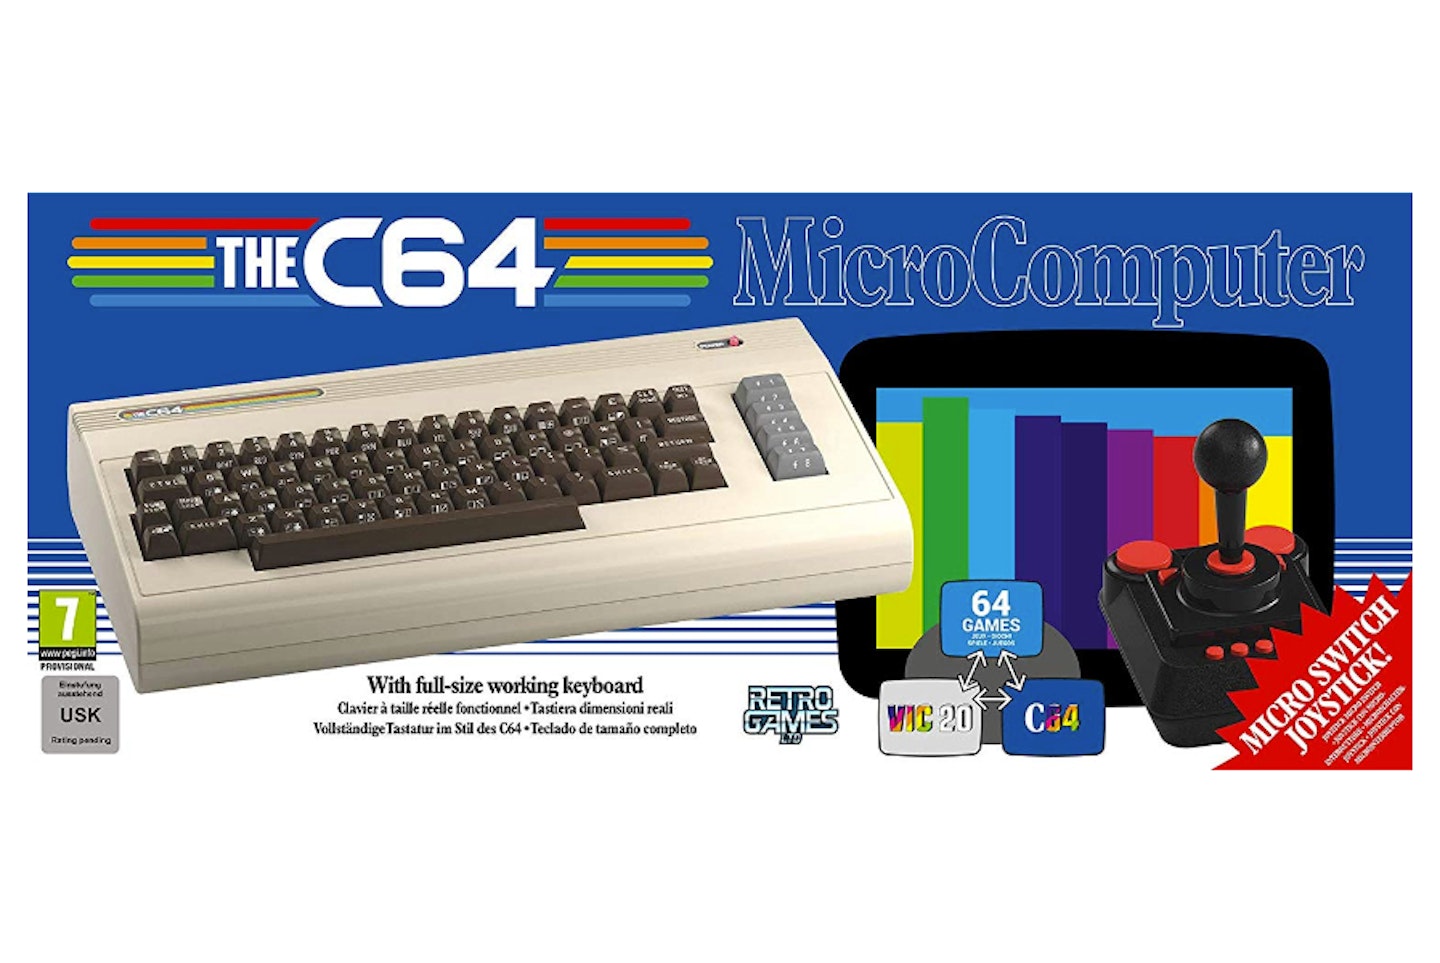 The C64 Micro Computer (2019 Model)